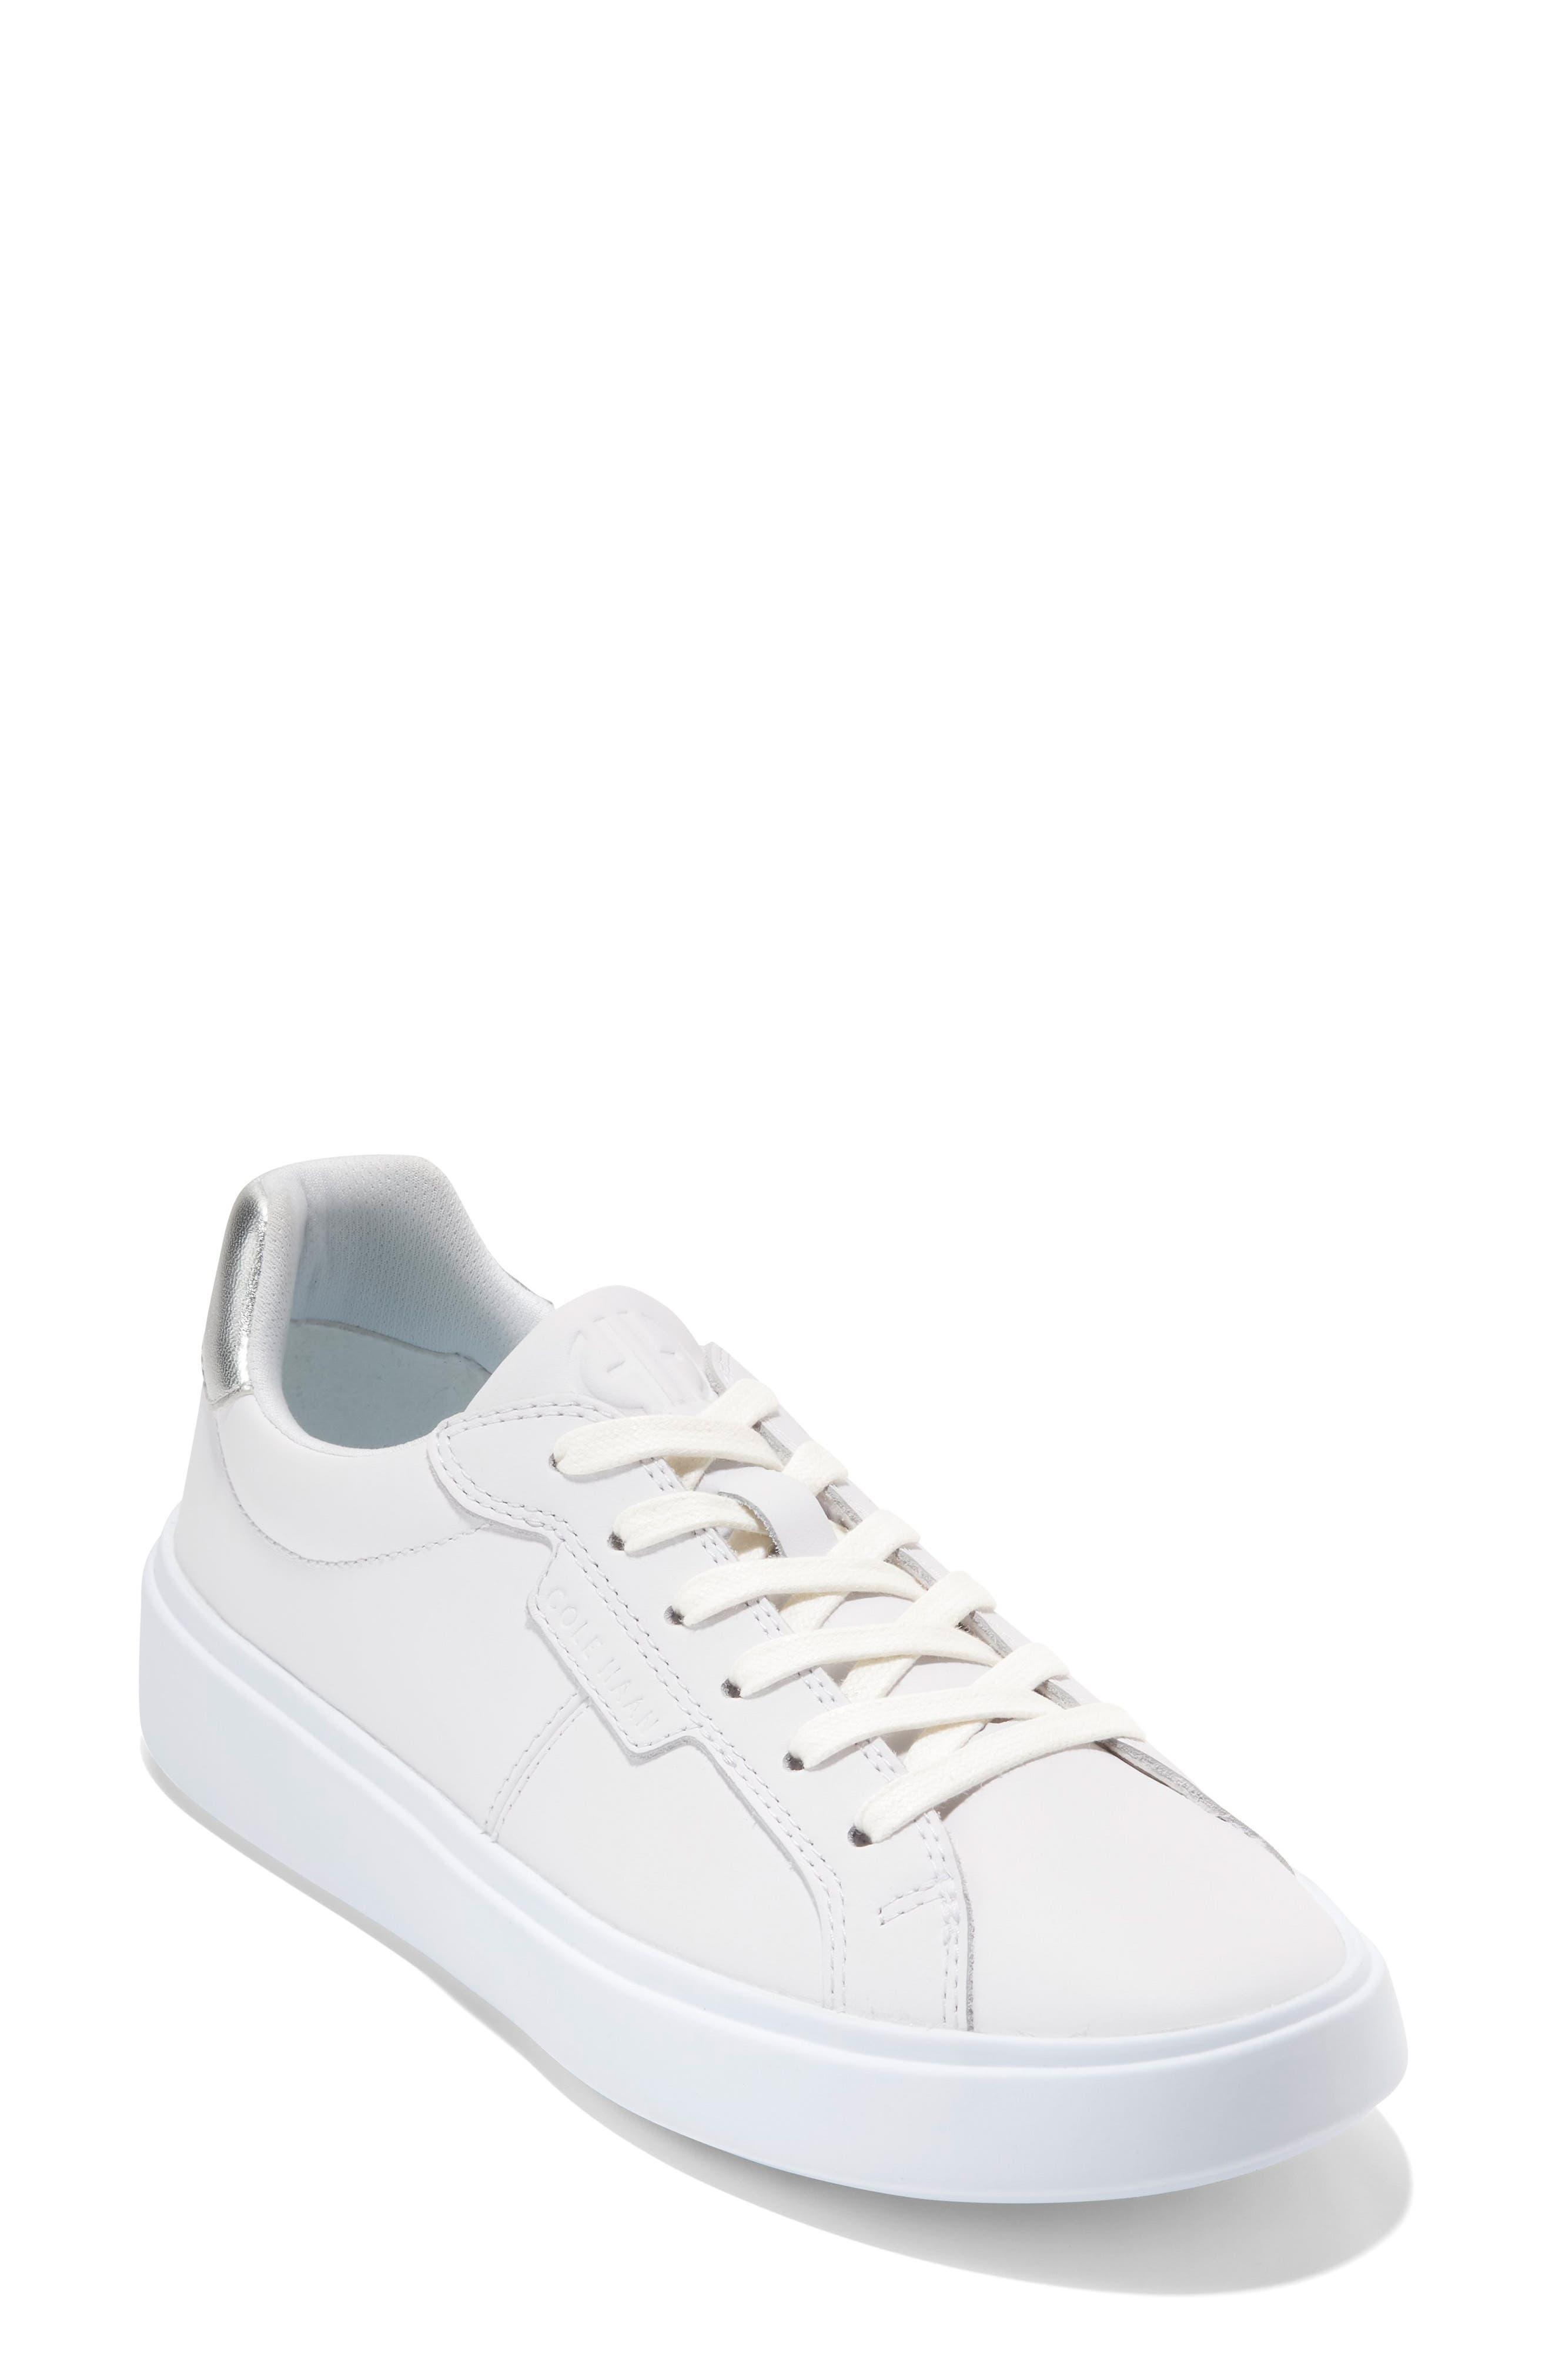 Cole Haan Danica Sneaker in White | Lyst